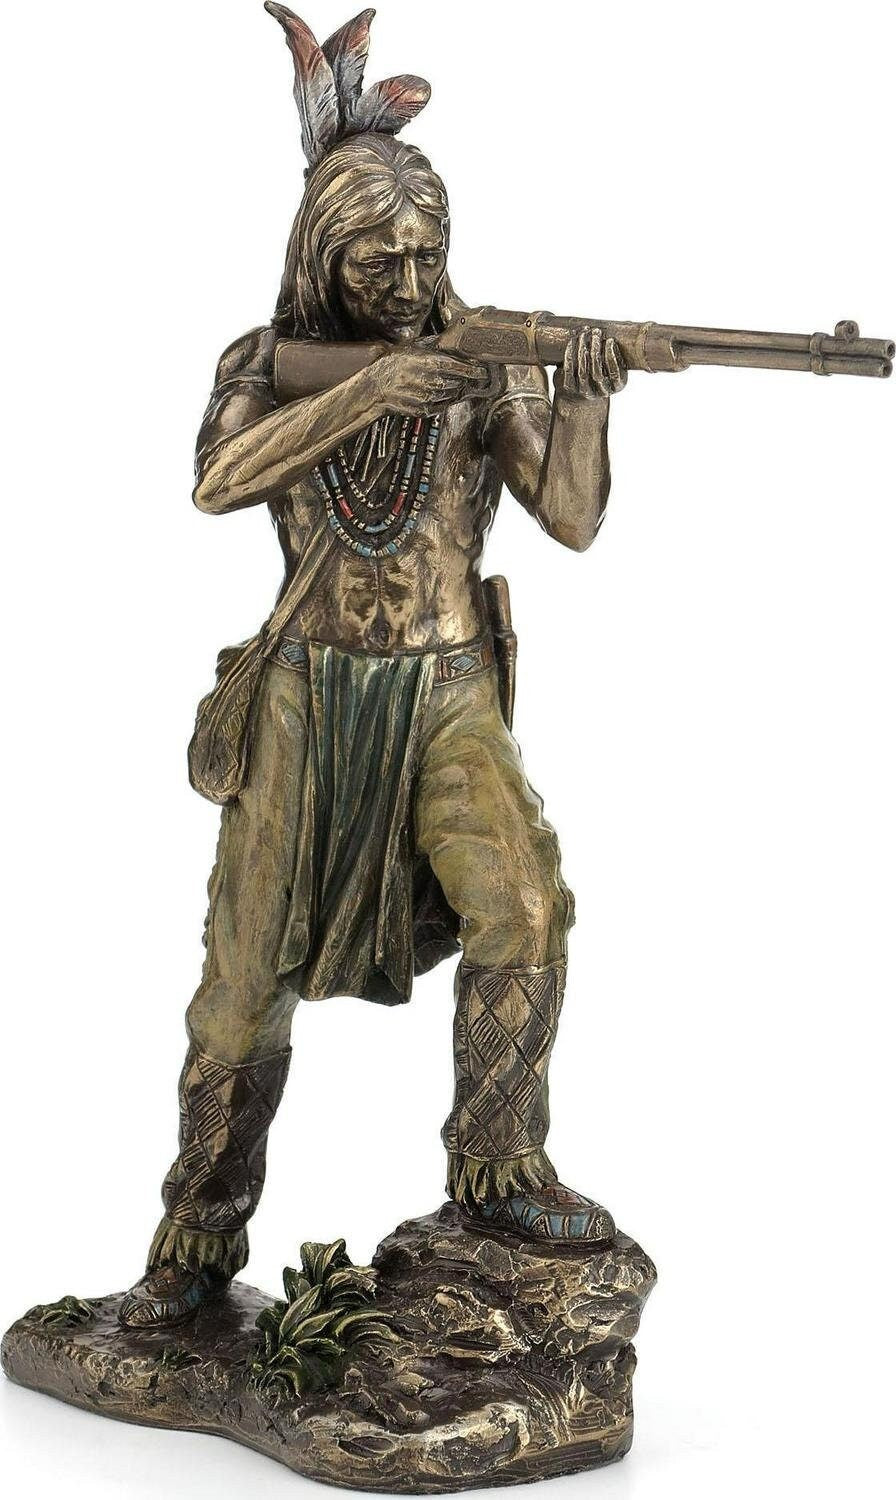 Indian warrior shooting rifle bronze statue anniversary gift home decor